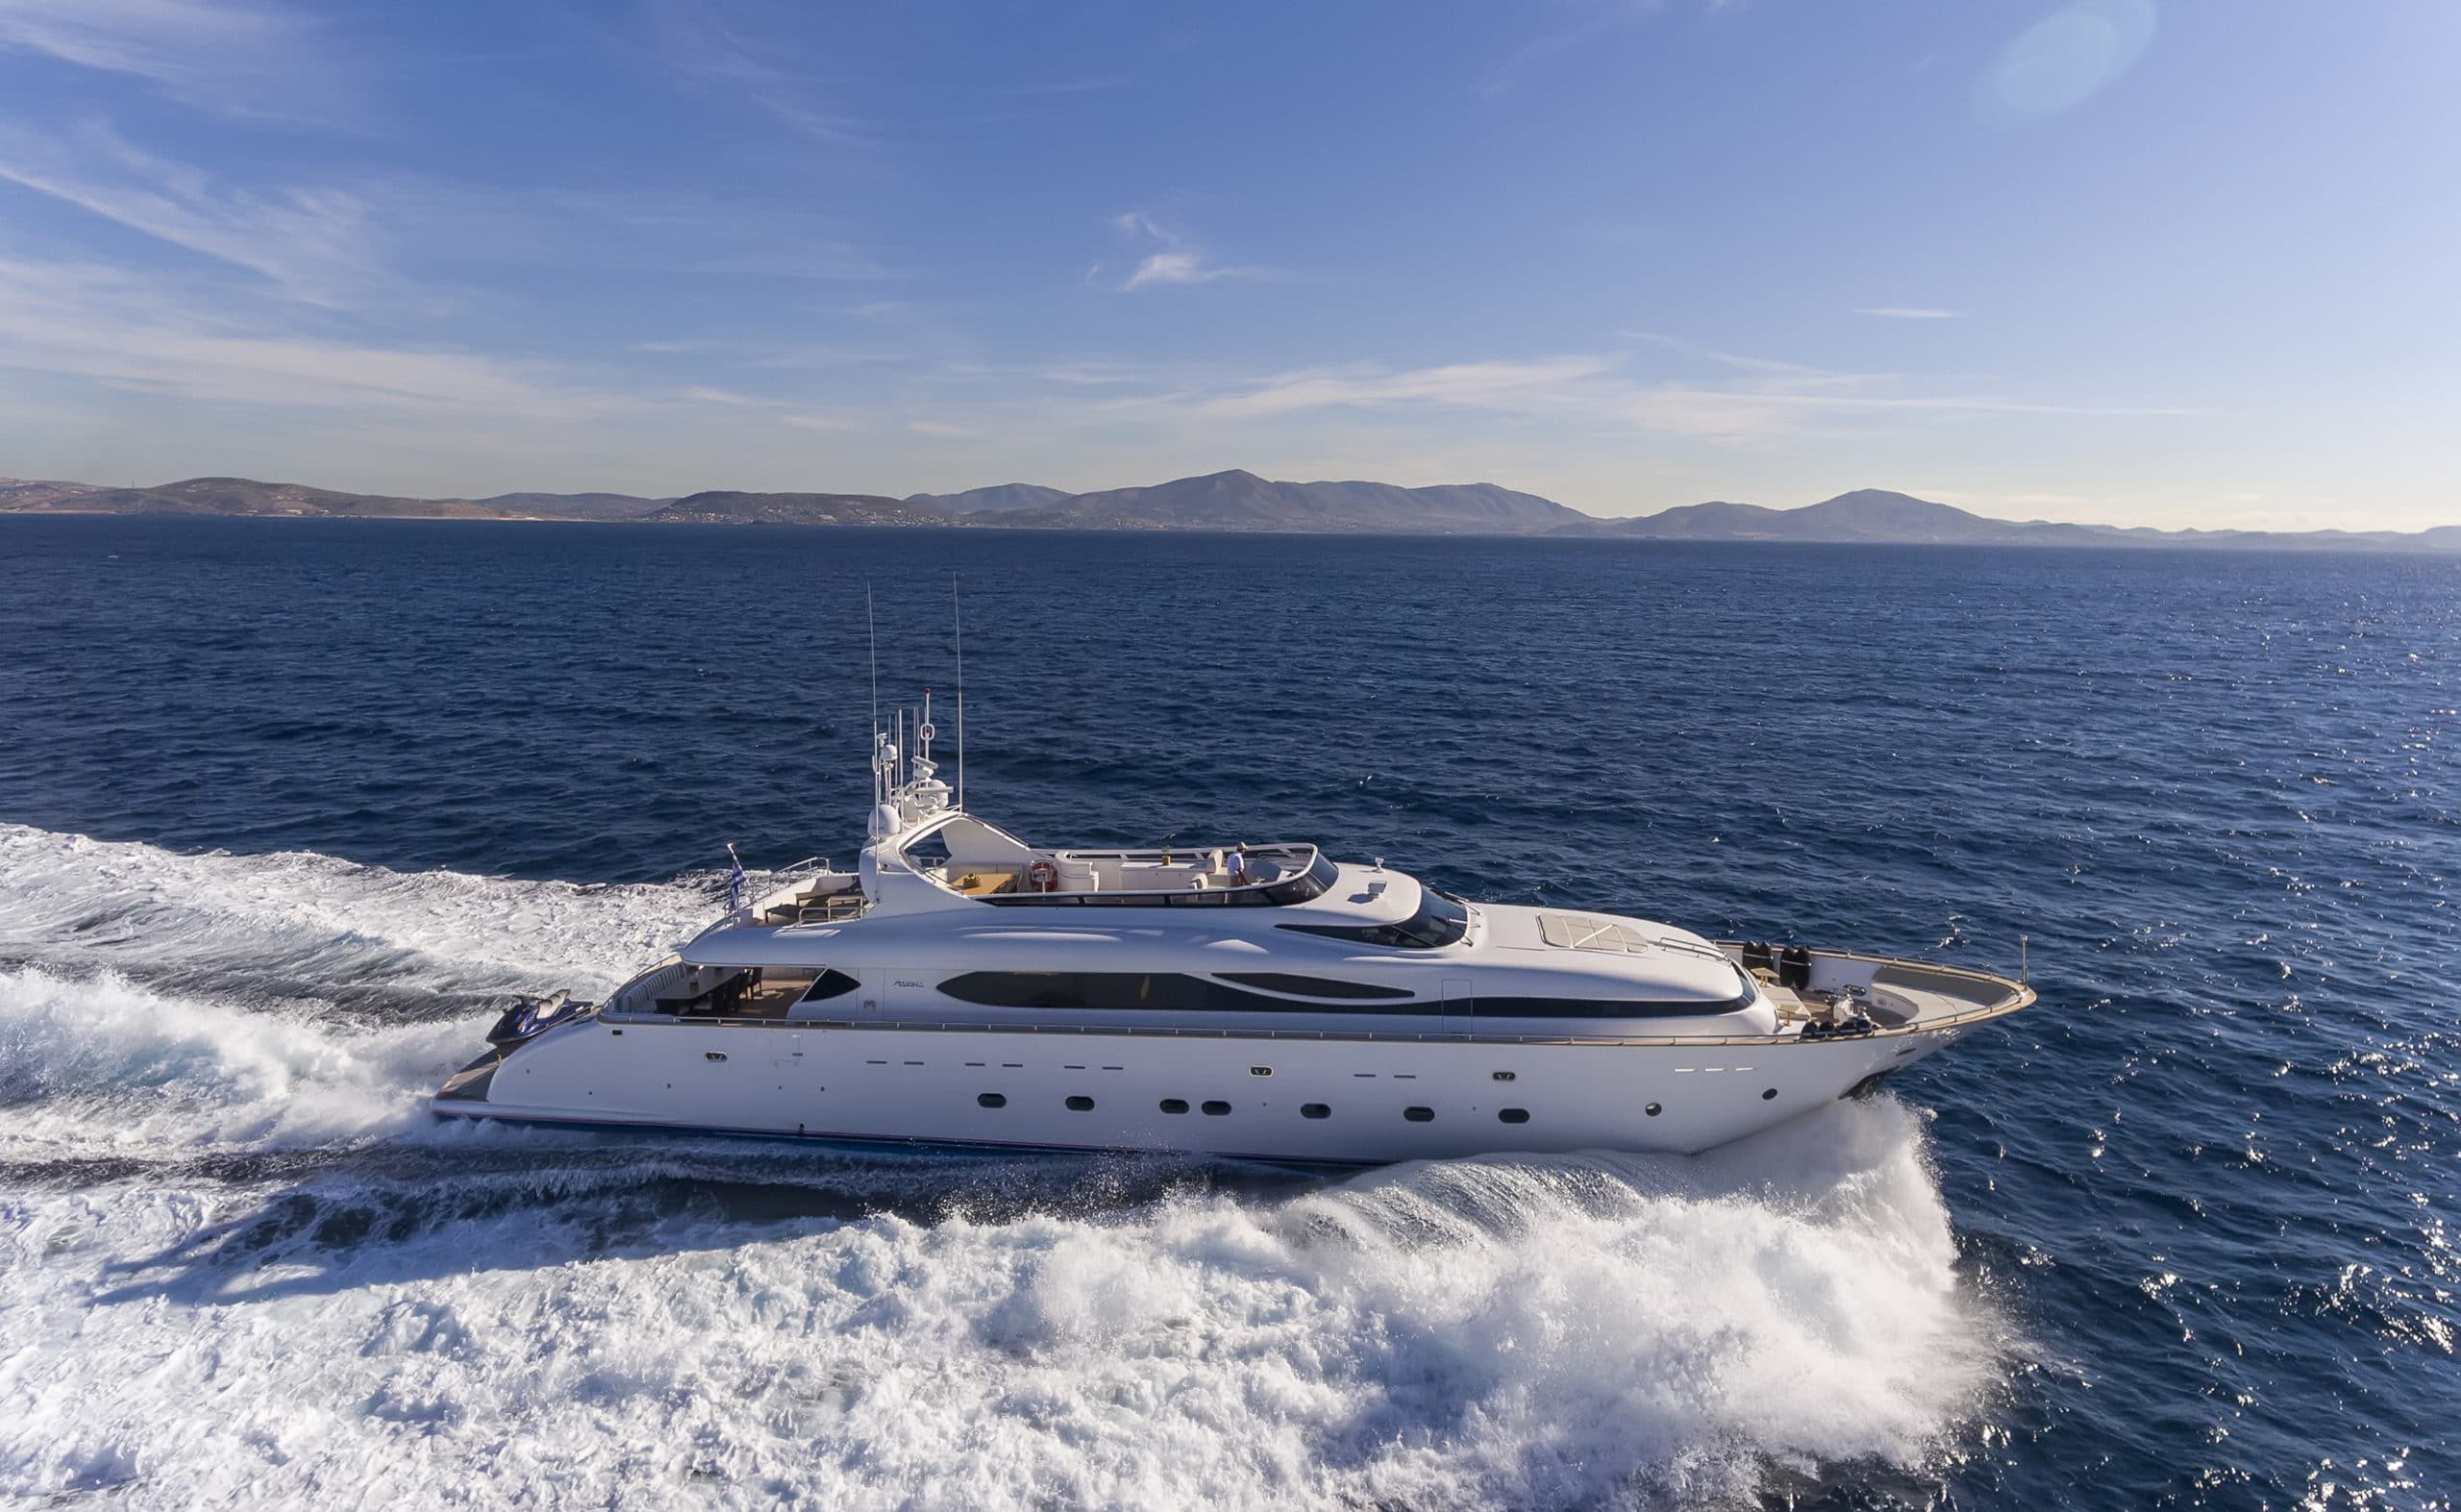 PROJECT STEEL Motor Yacht Charter in Greece - Luxury Charter Group